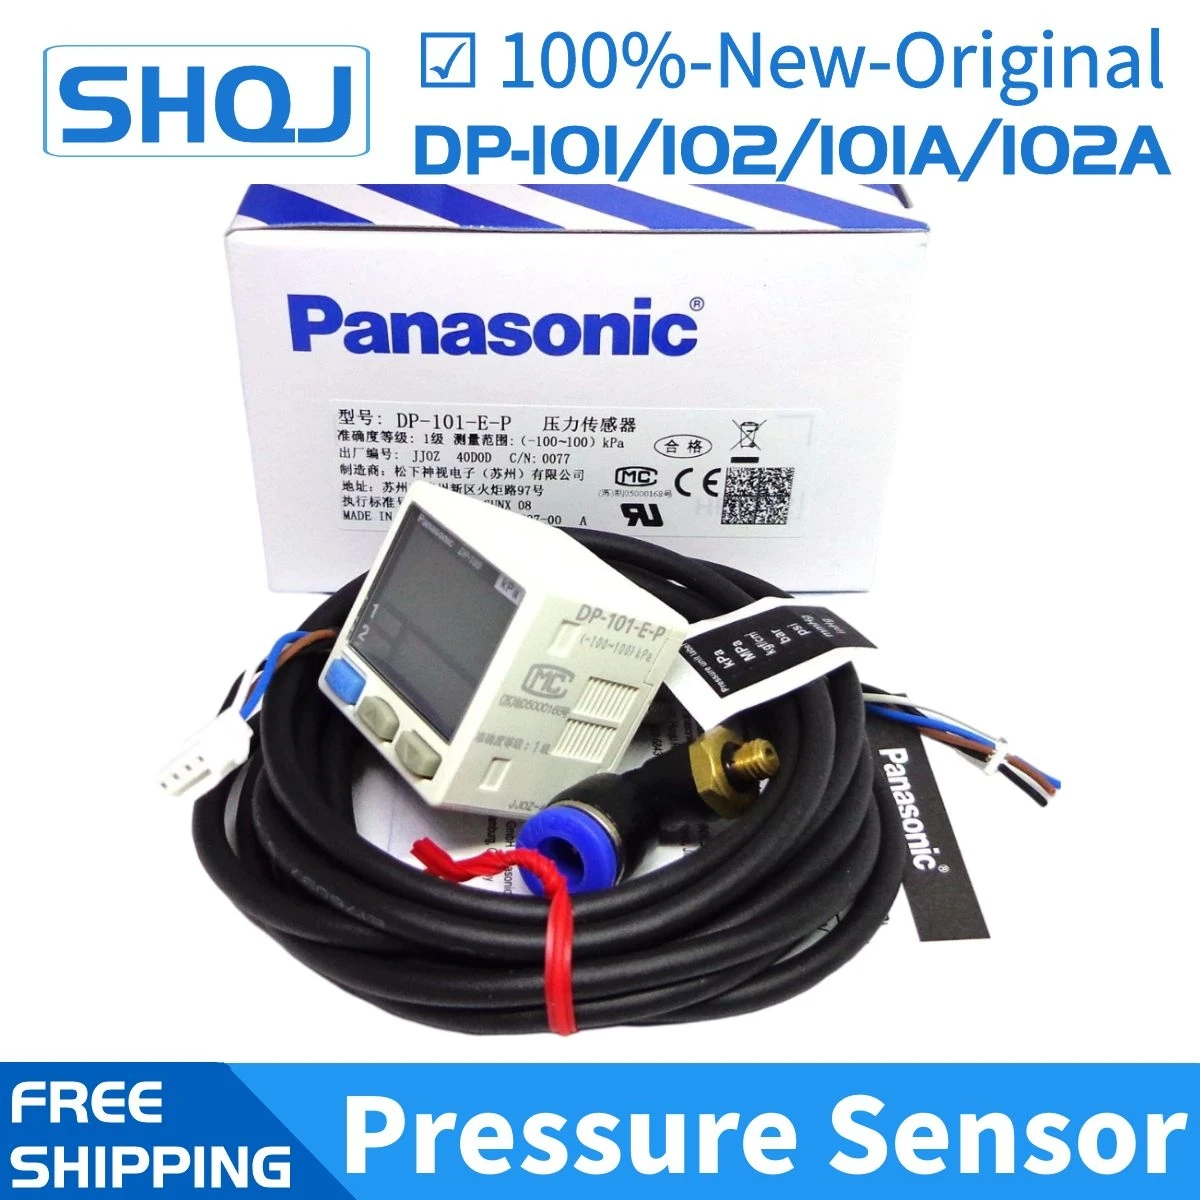 

DP-101 102/101A/102A/011/012 NPN Digital Vacuum Negative Pressure Sensor Pressure Controller -100 to +100 kPa 100% New&Original